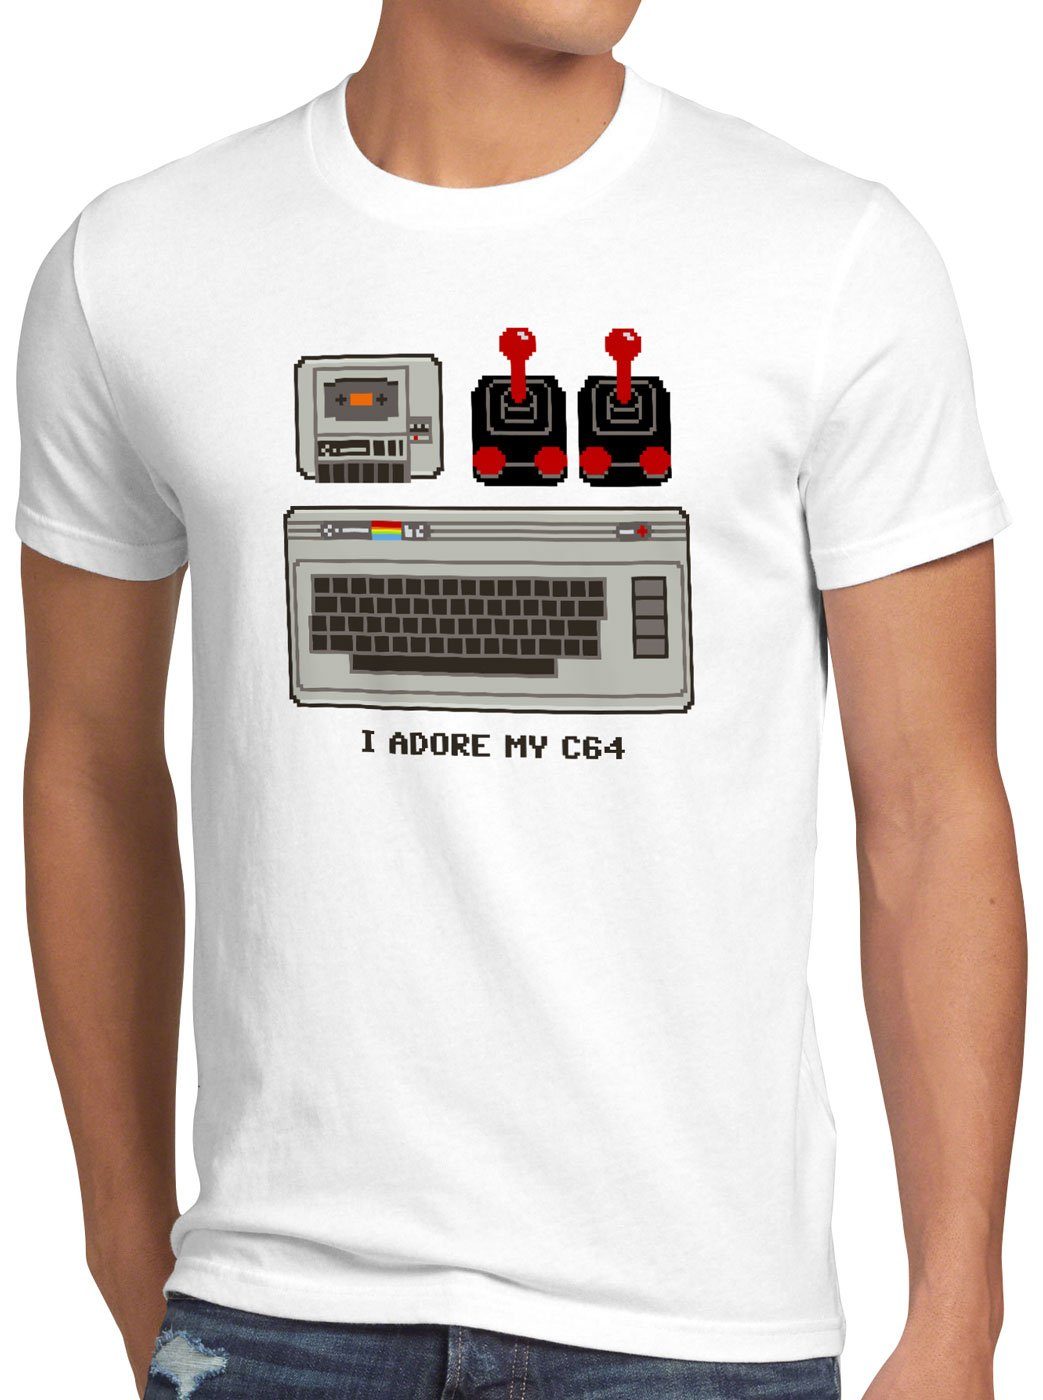 heimcomputer Print-Shirt T-Shirt I style3 classic Herren C64 weiß Adore My